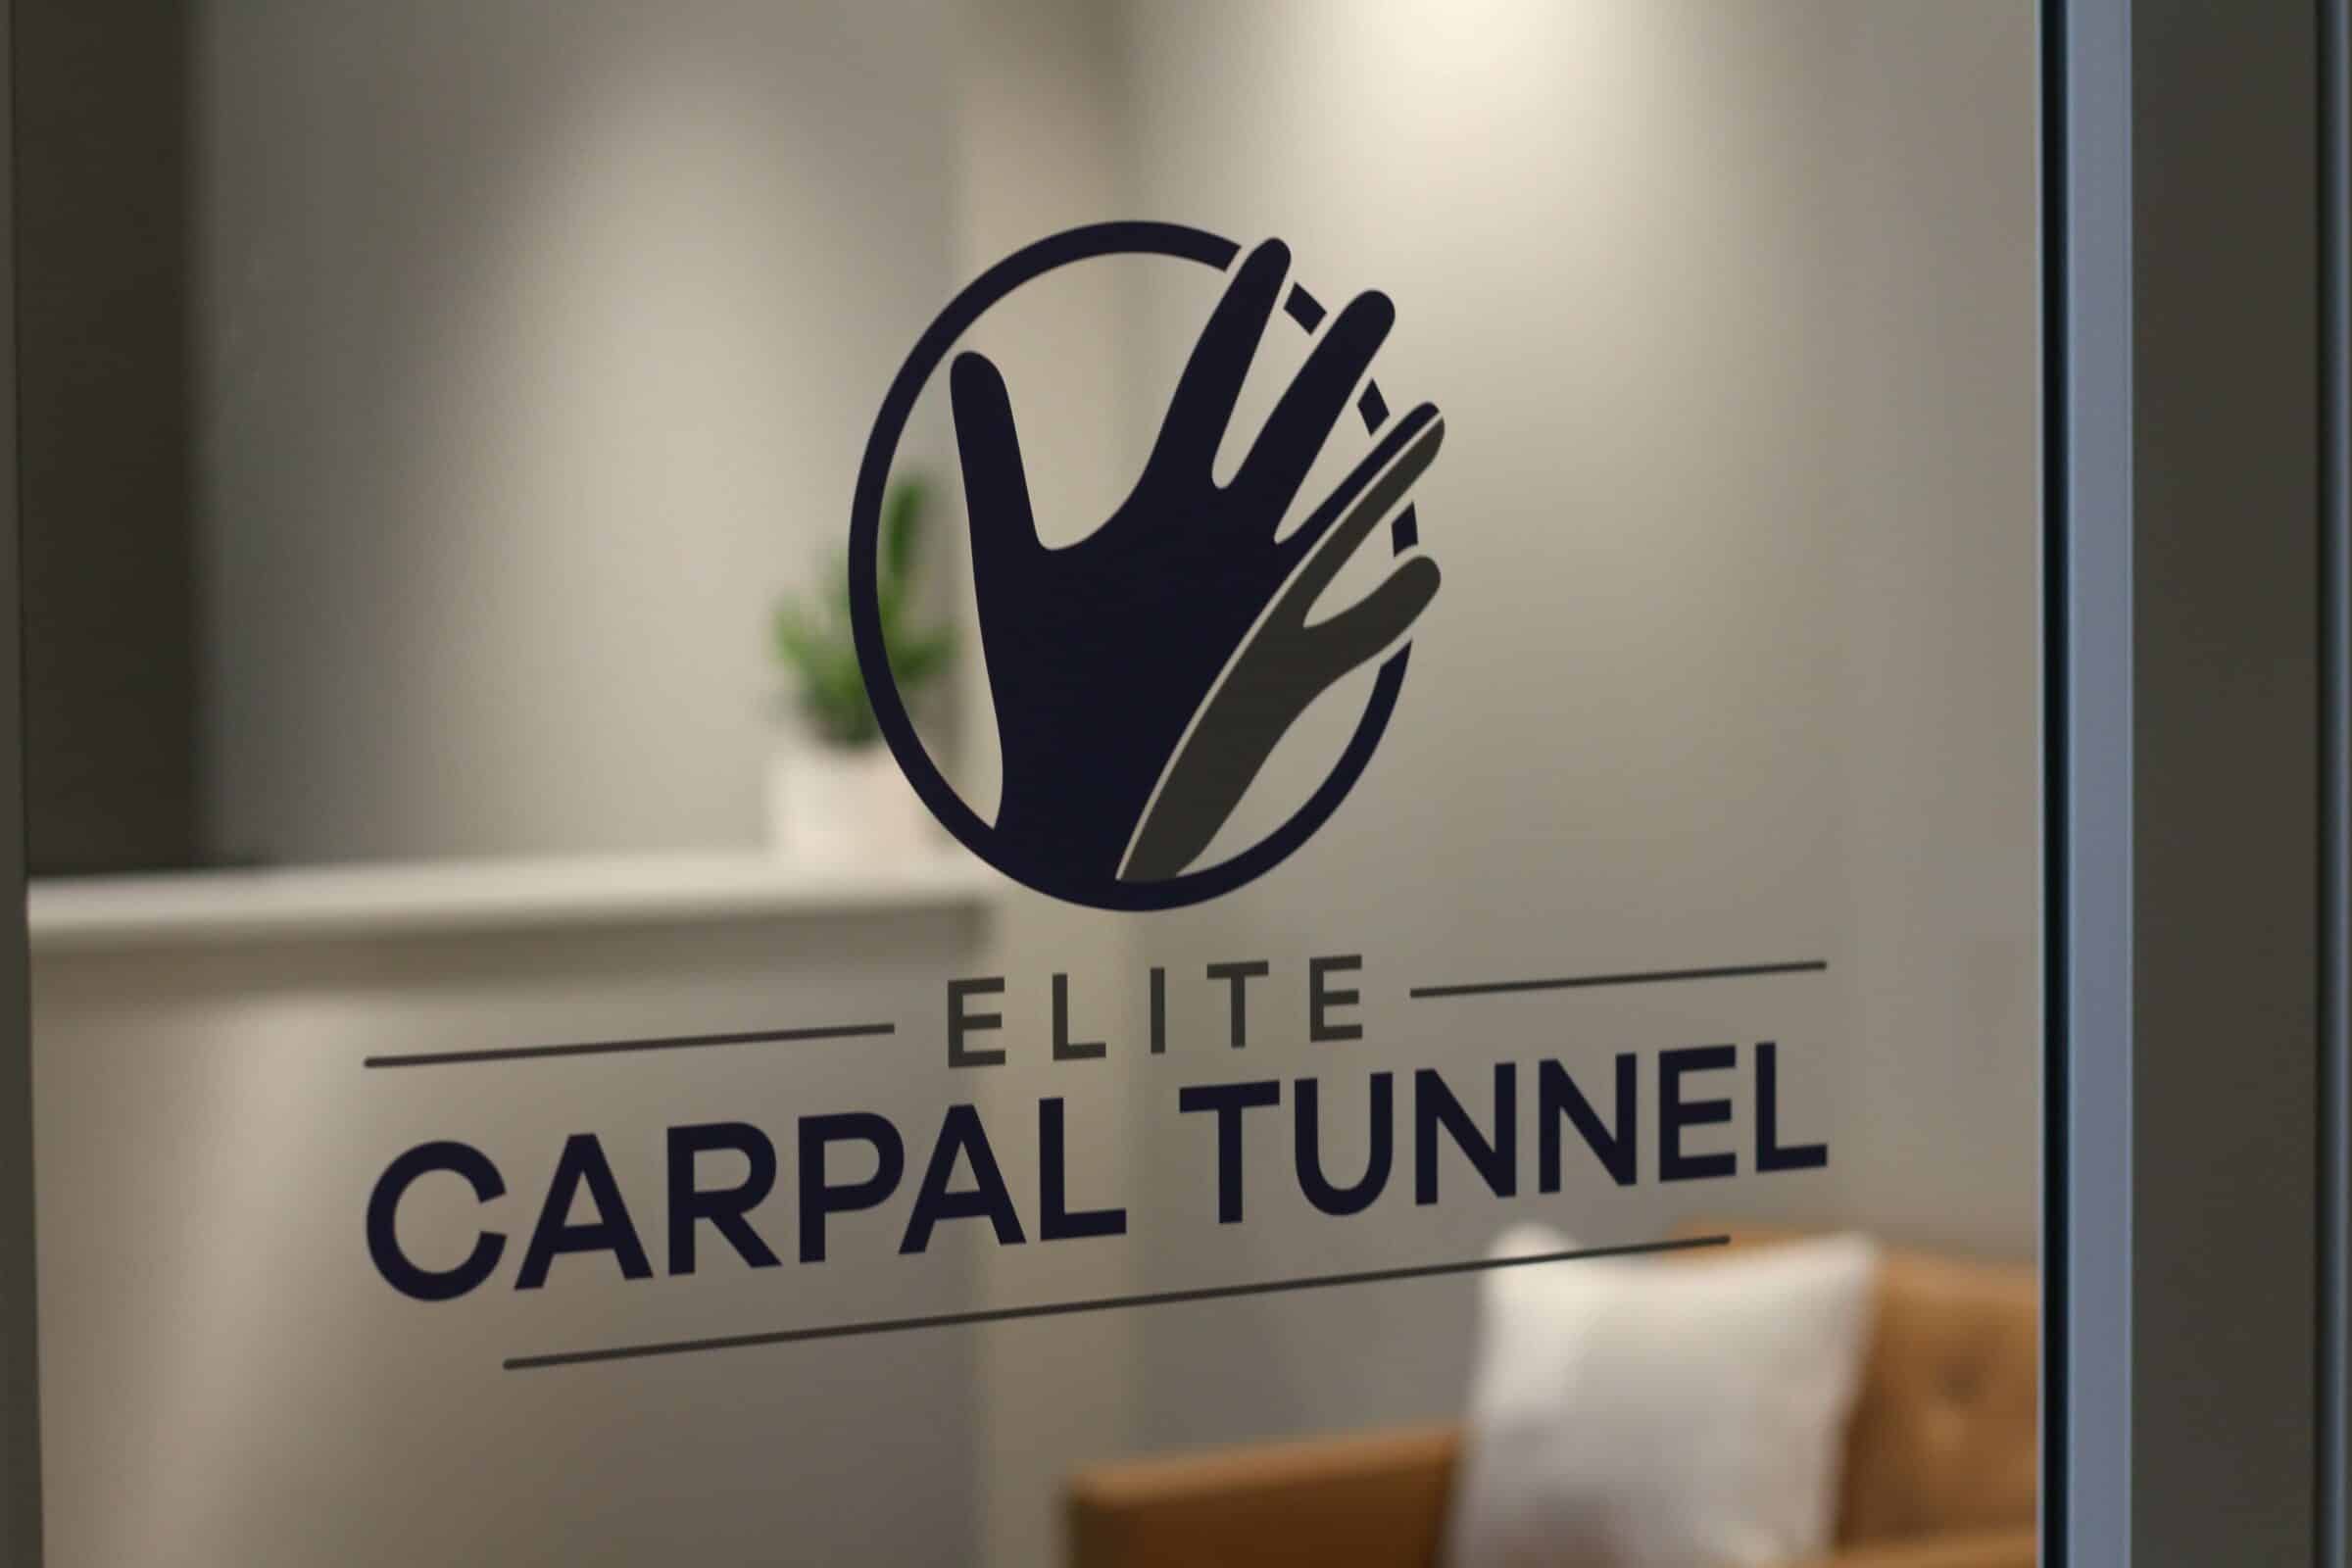 elite carpal tunnel logo on window